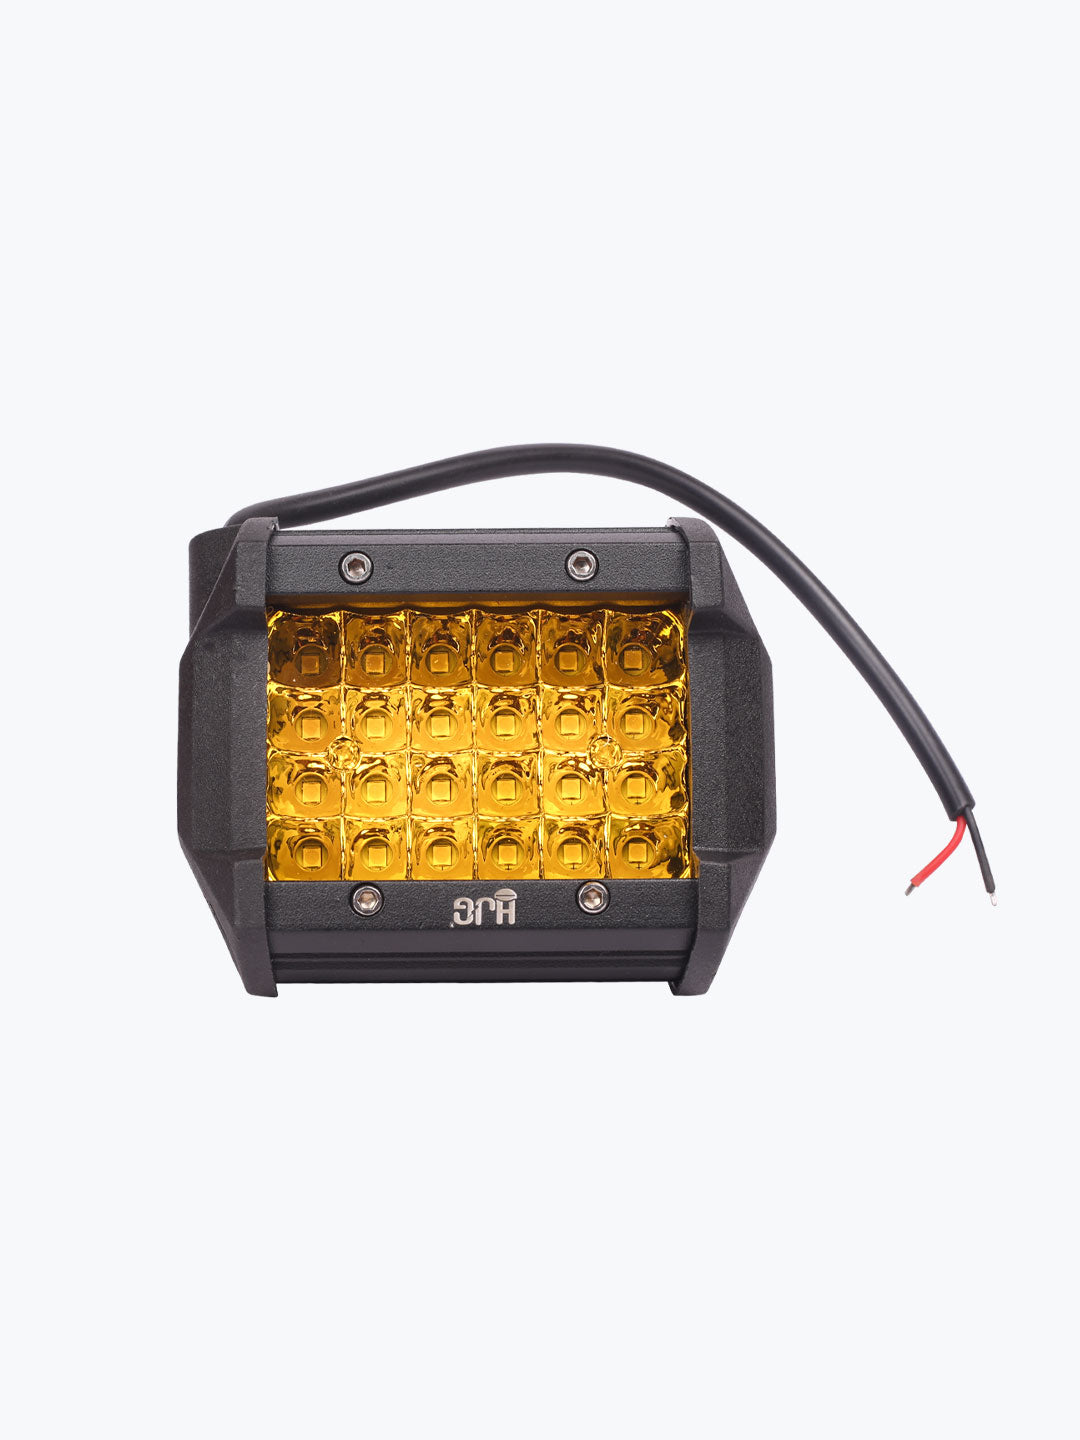 24 LED Yellow Square Foglight